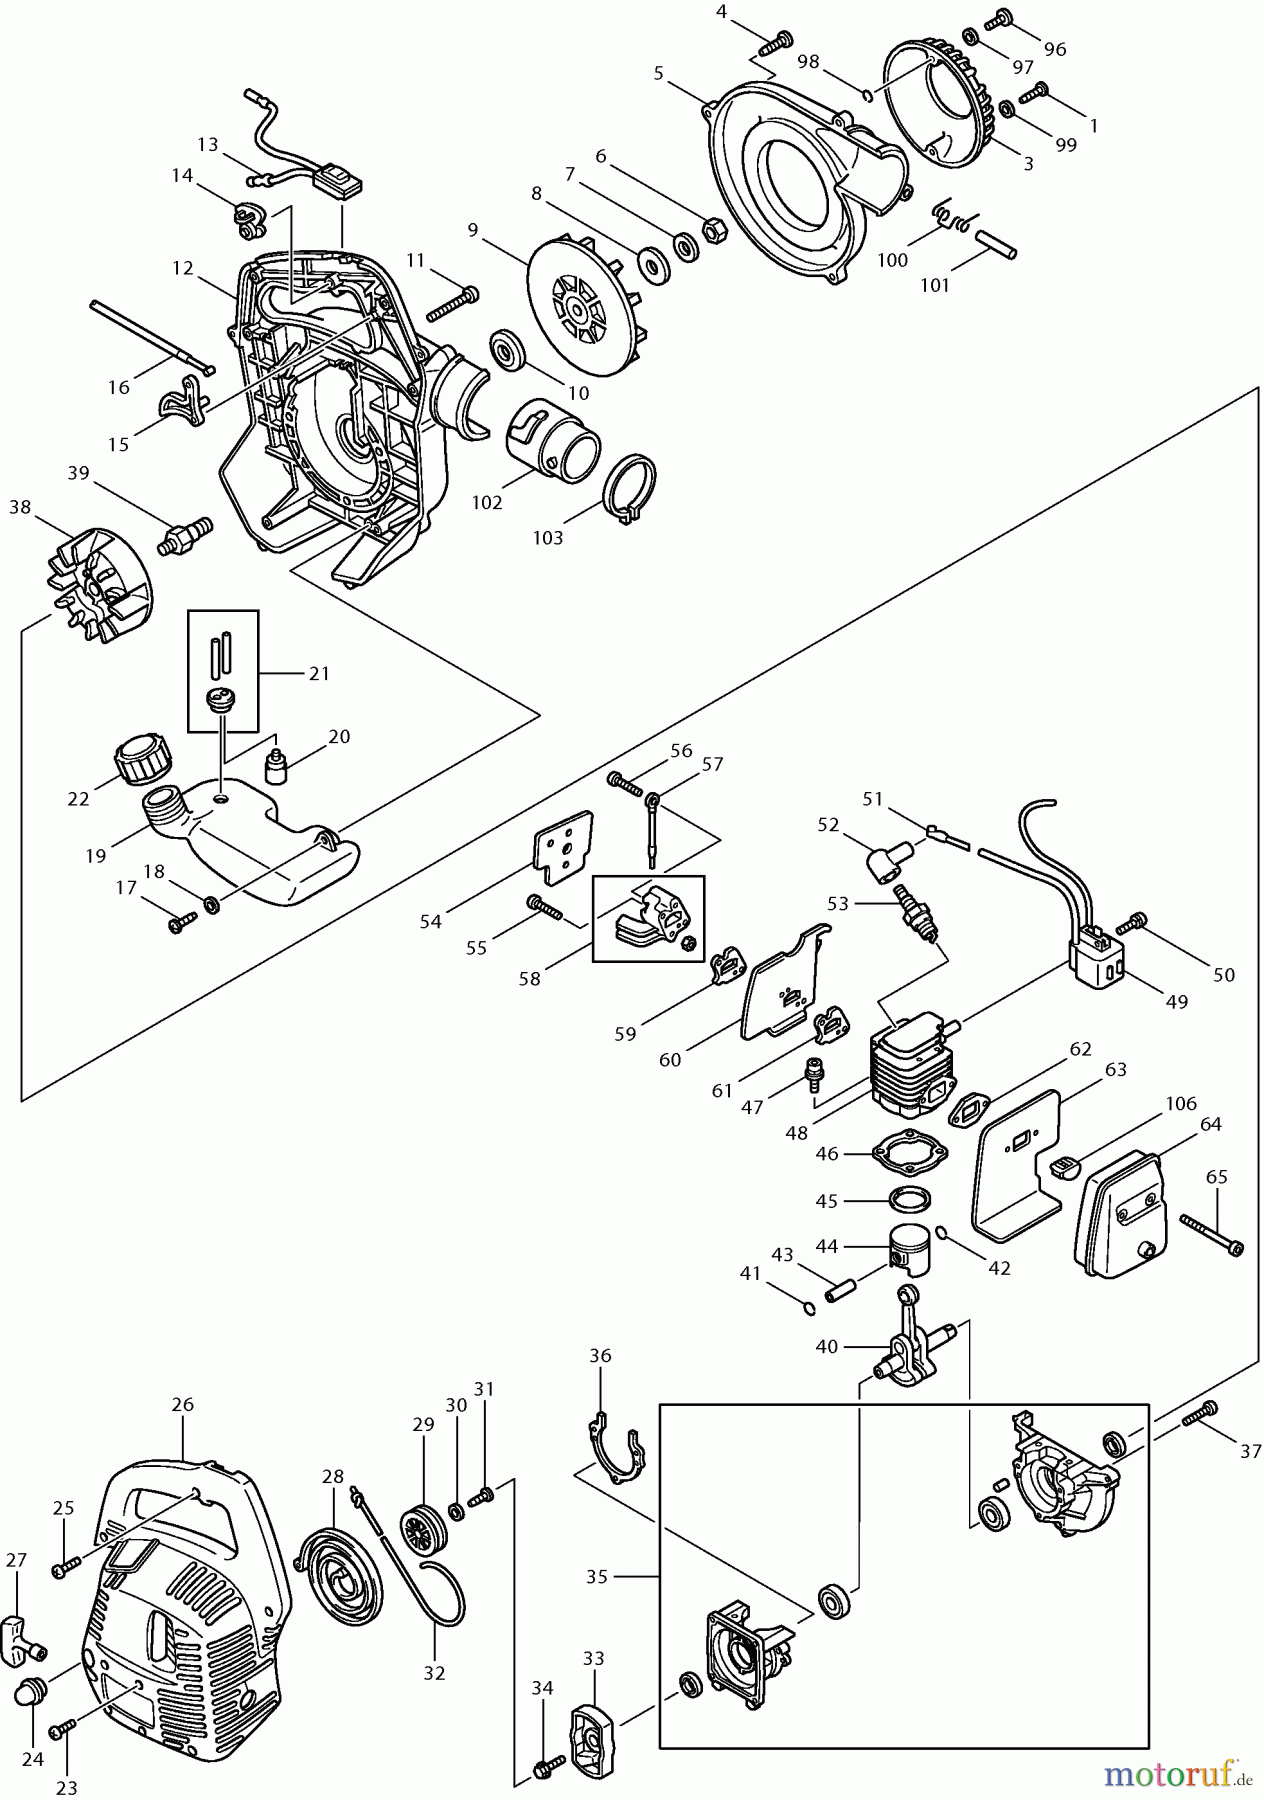  Dolmar Blasgeräte Benzin PB-250 (USA) 1  Gebläsegehäuse, Anwerfvorrichtung, Tank, Motor, Zündung